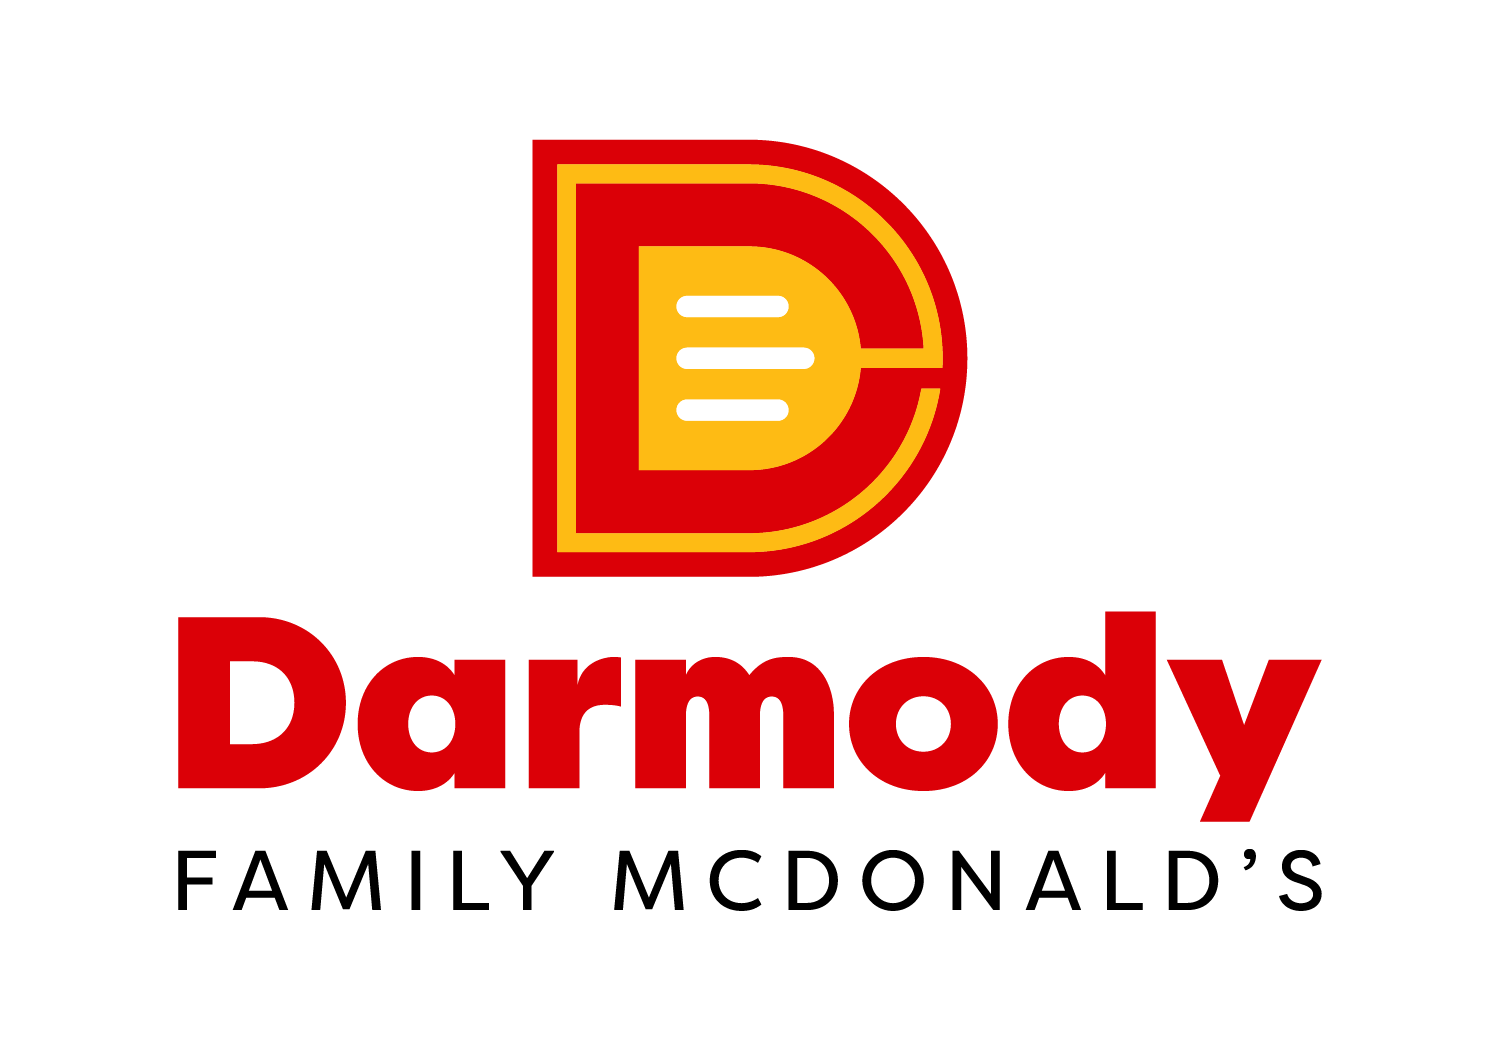 Darmody Family McDonald's